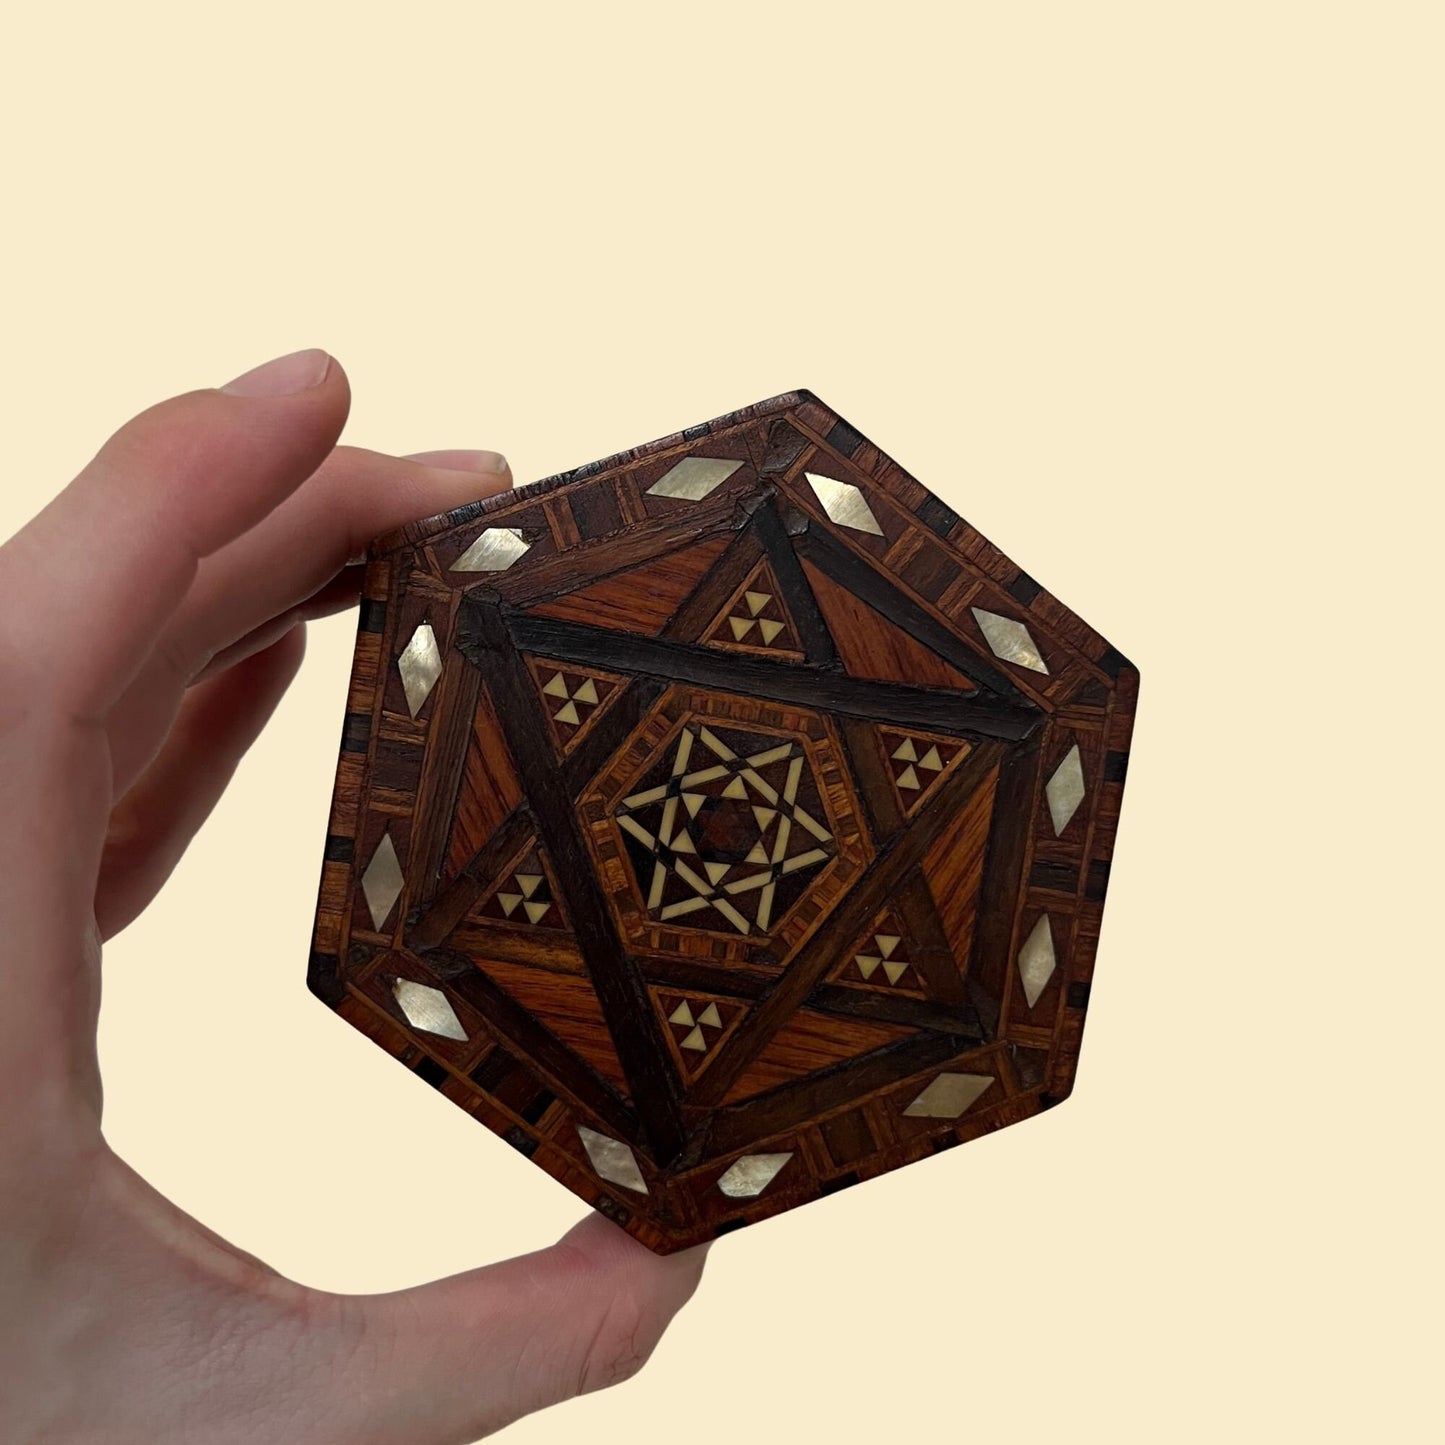 Vintage handmade wooden box with stone inlay, 1950s octagon shaped wooden trinket box, intricate geometric star/octangular box